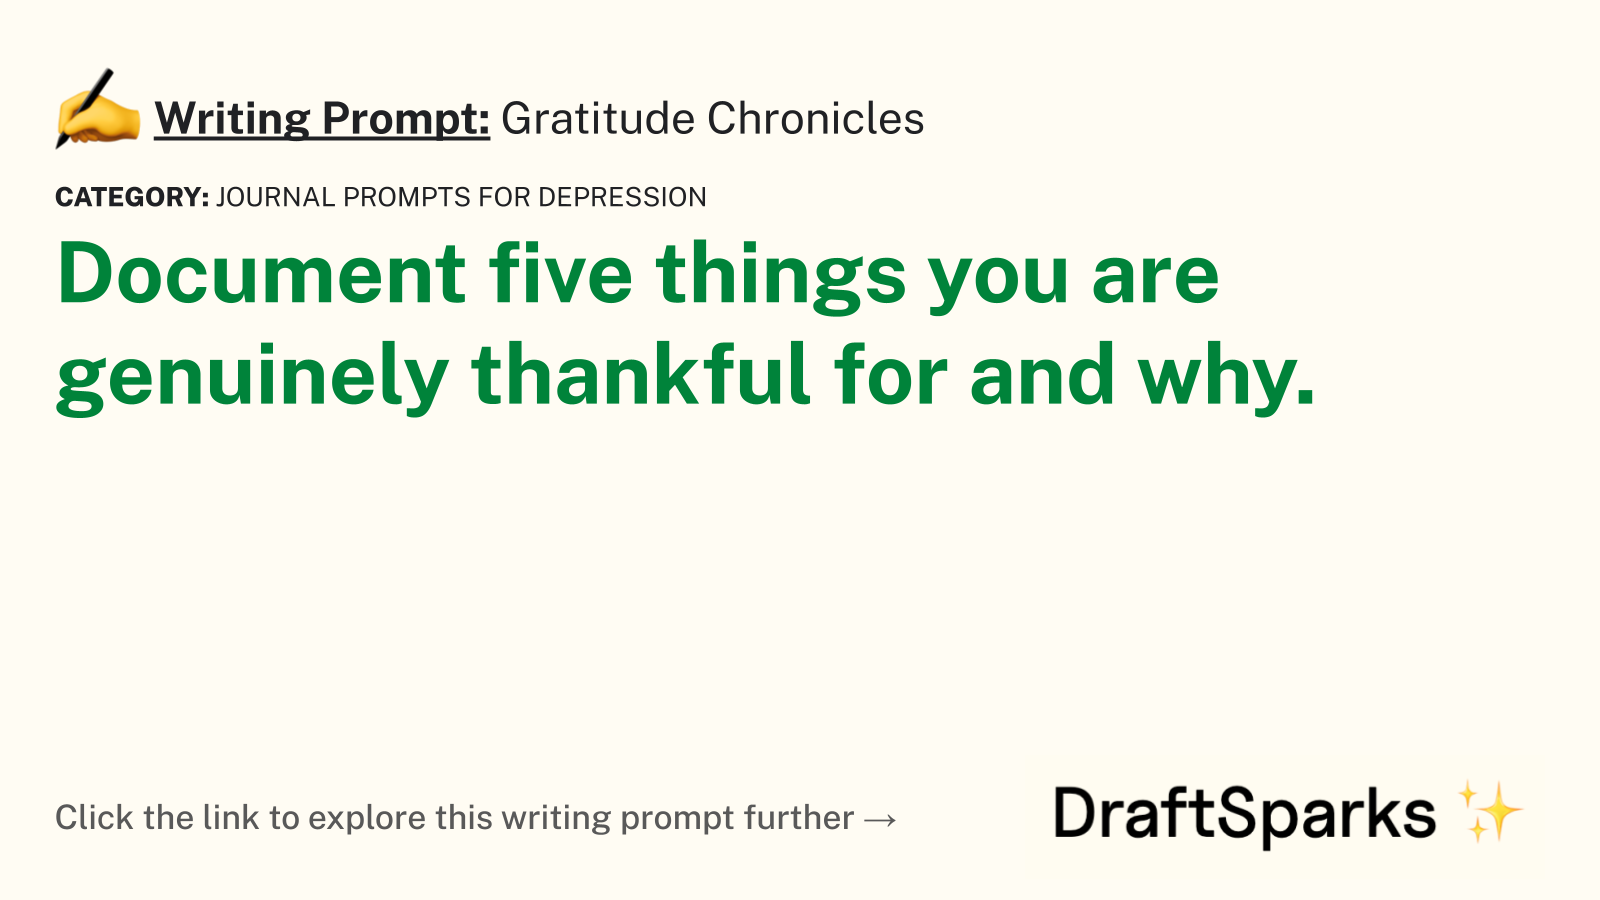 Gratitude Chronicles